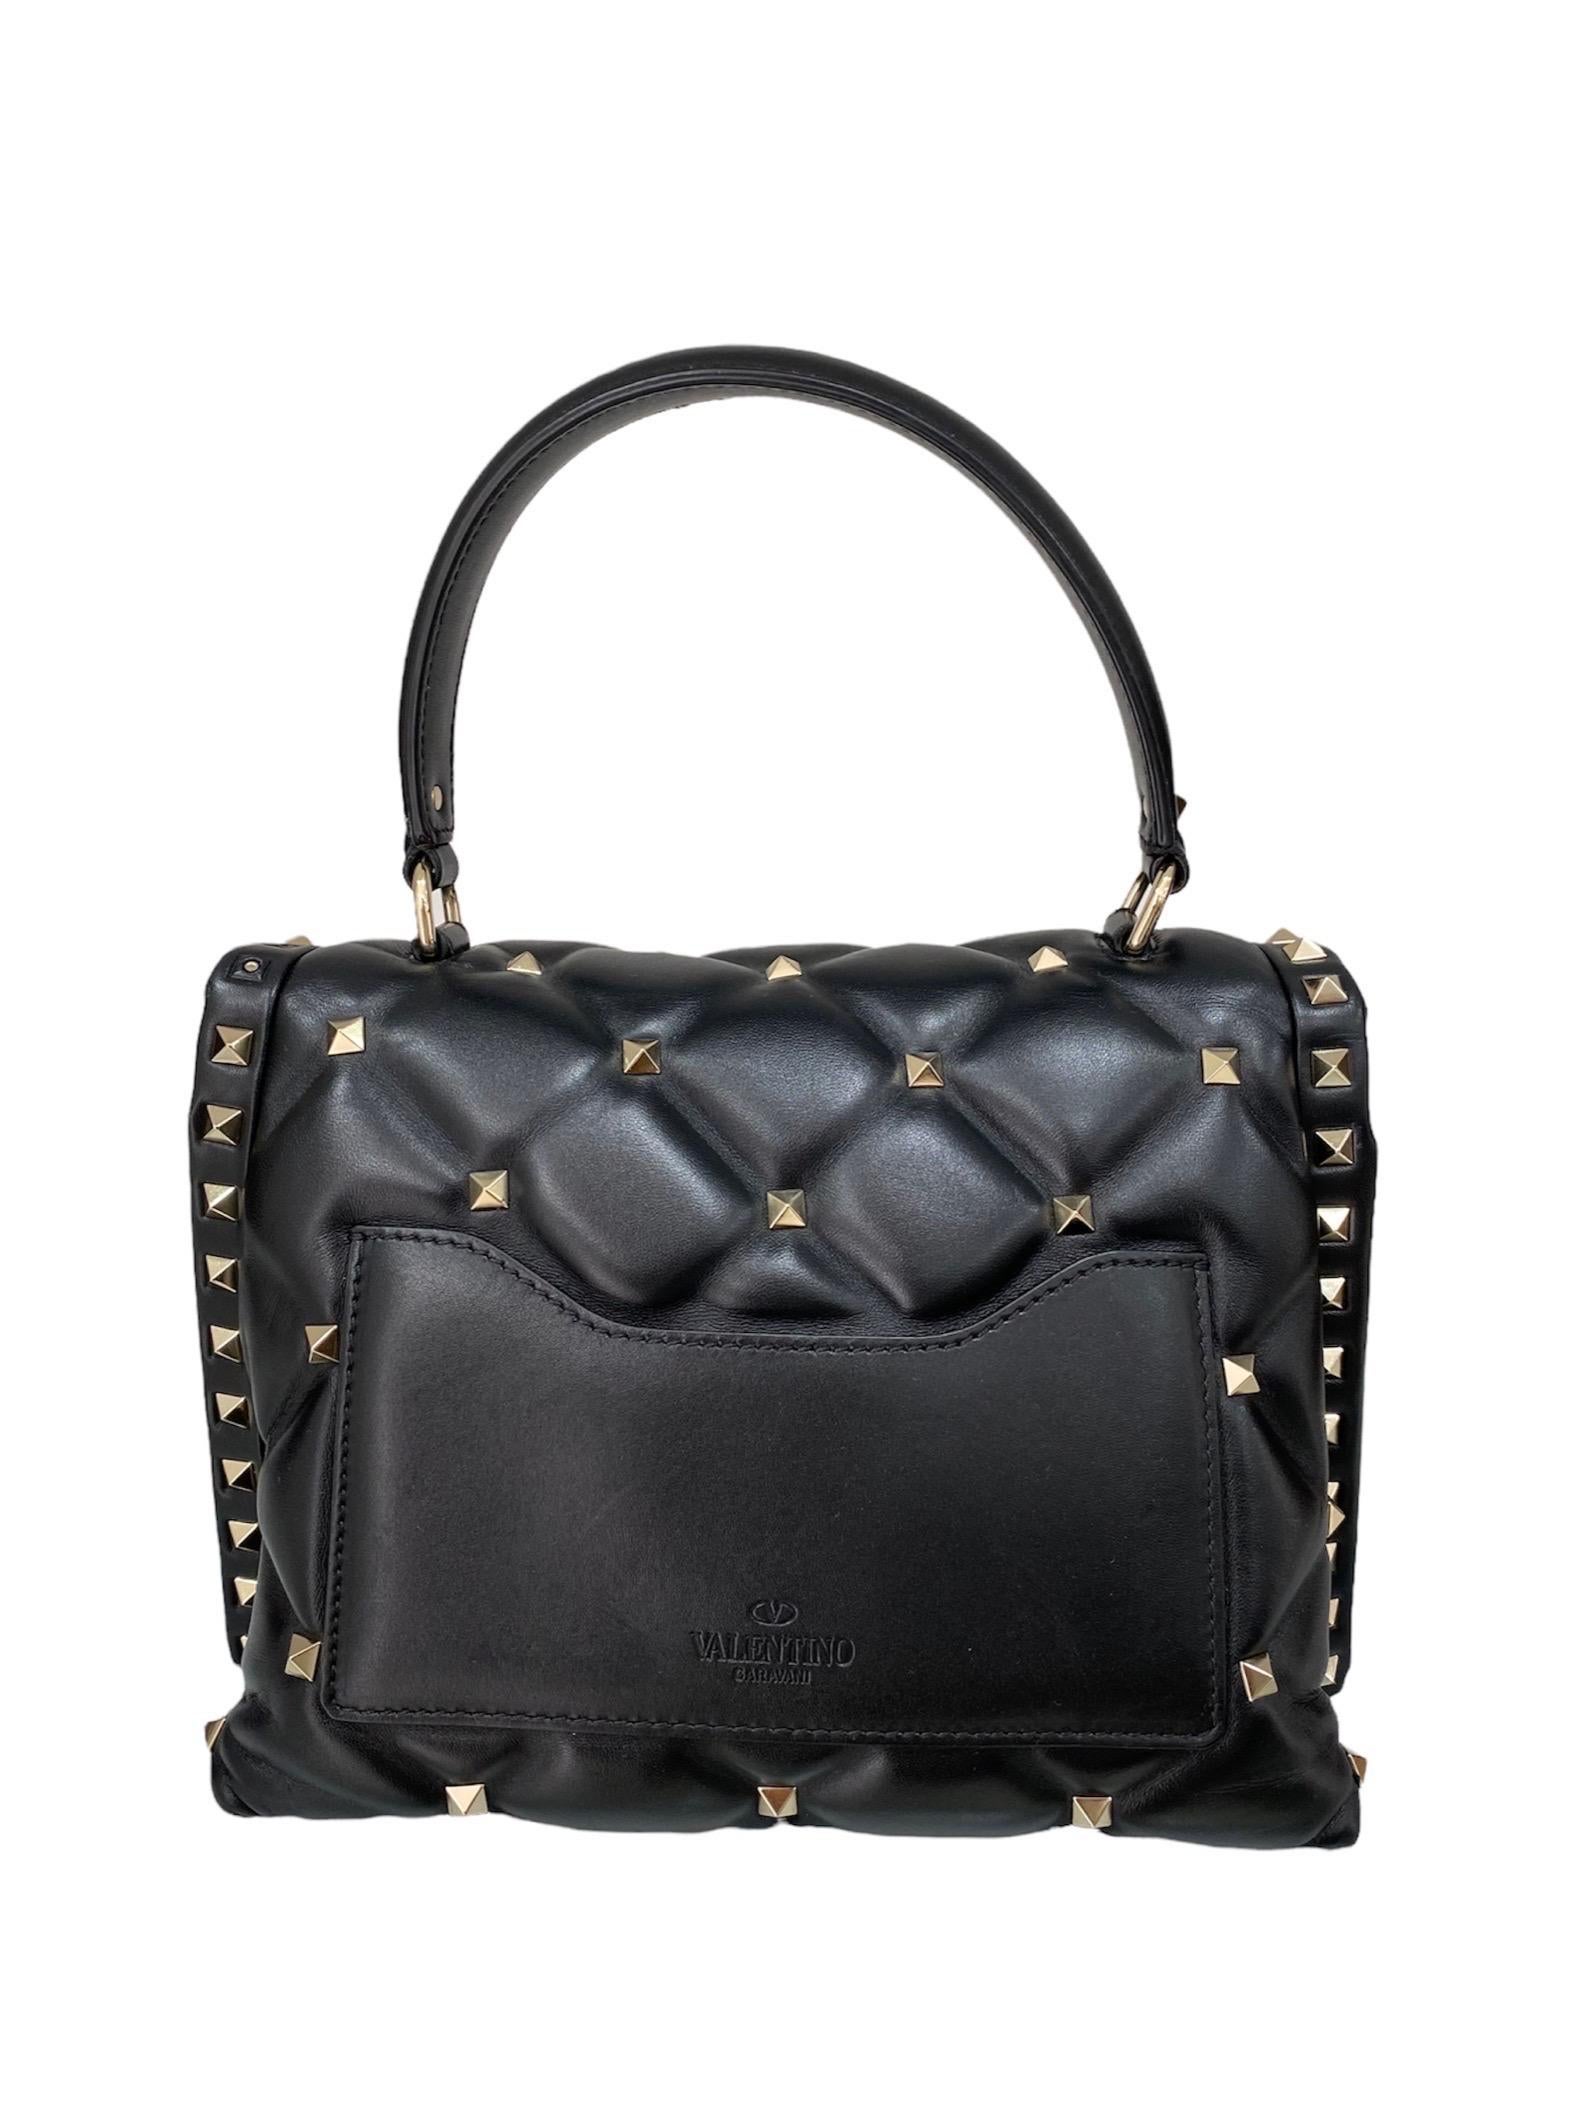 Women's Valentino Candystud Black Handbag